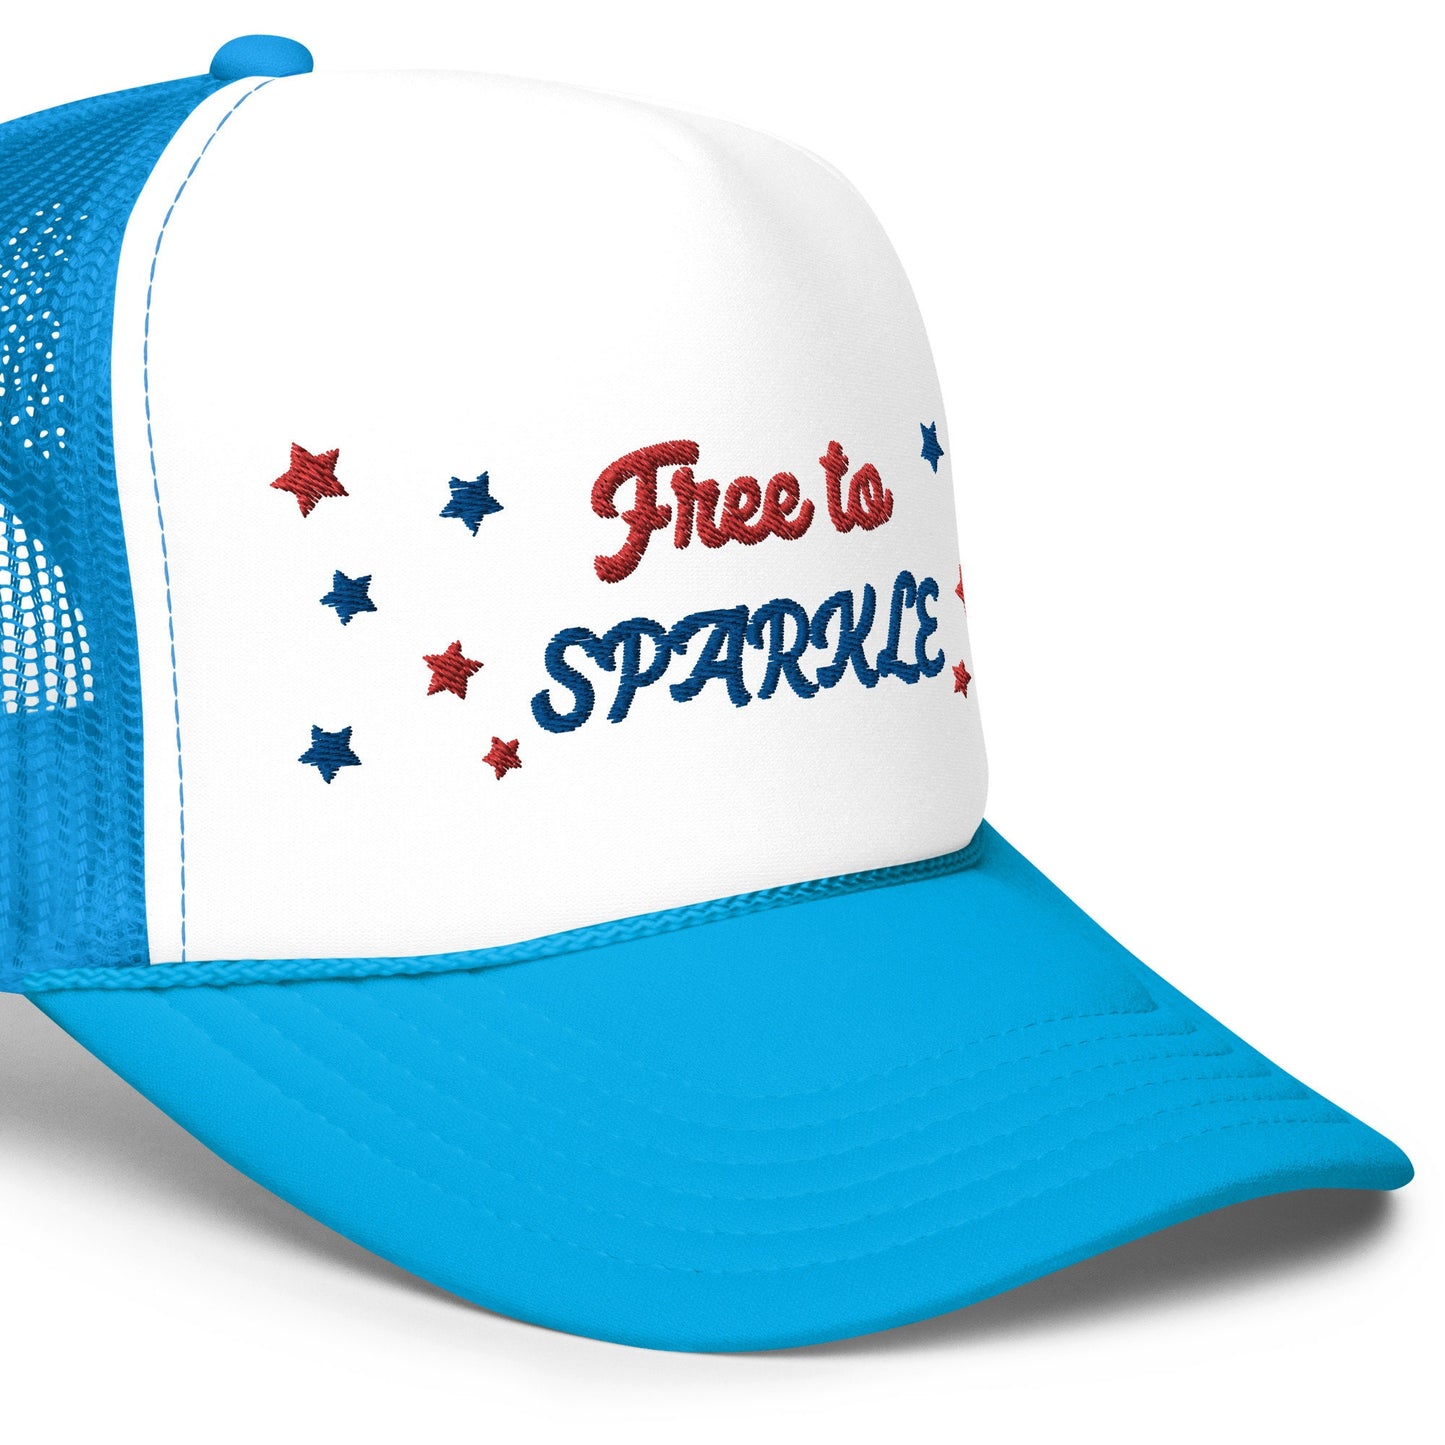 Free to Sparkle Truker Hat